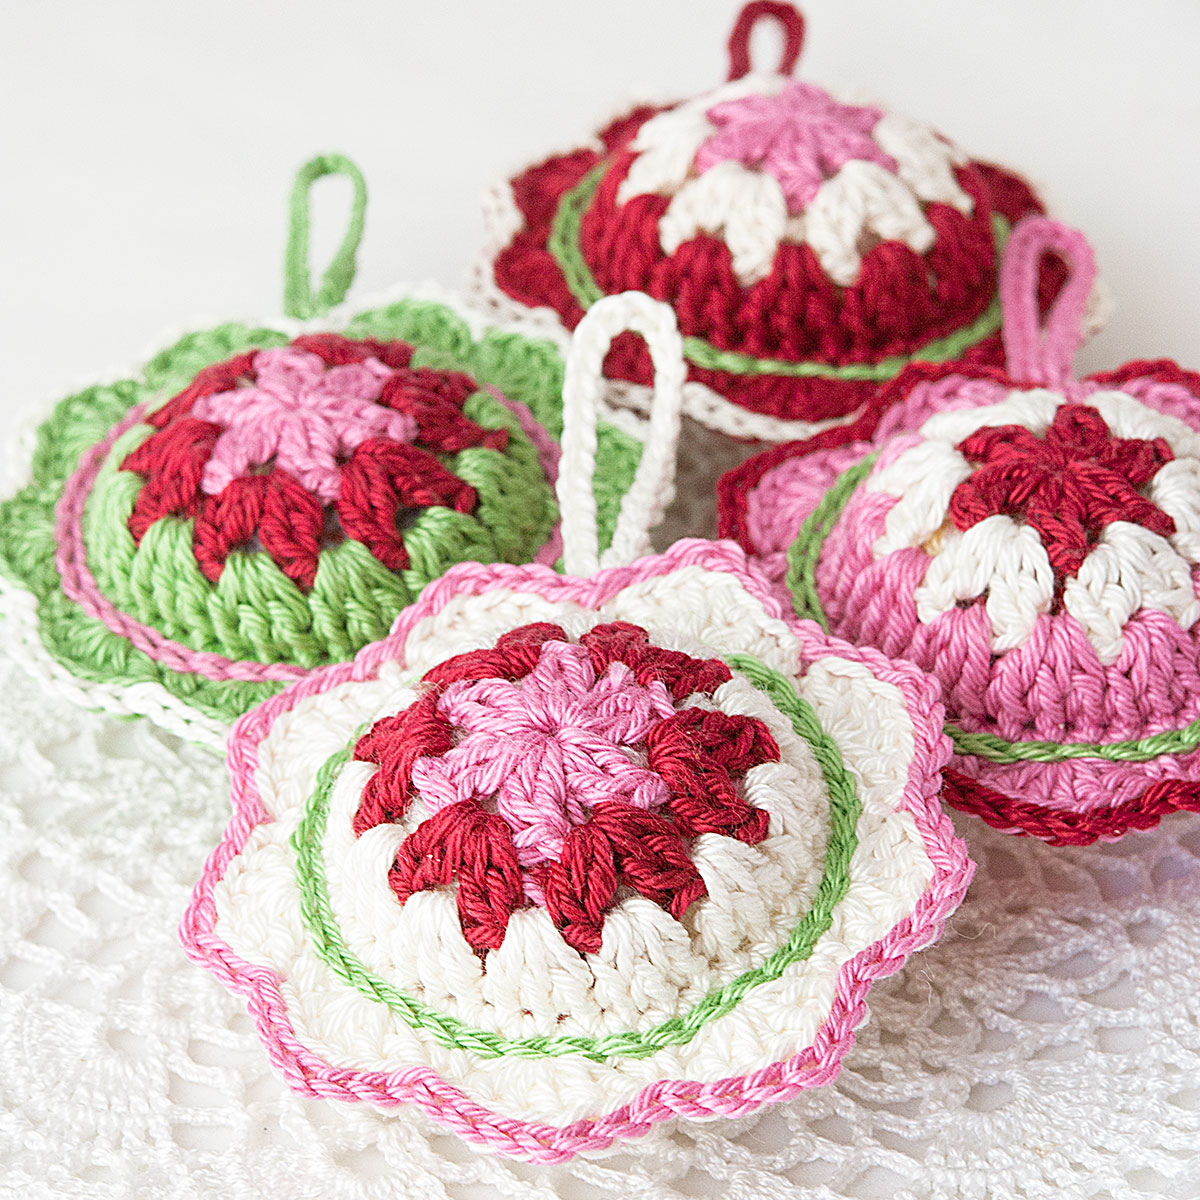 Anabelia craft design New Christmas crochet ornaments, pattern